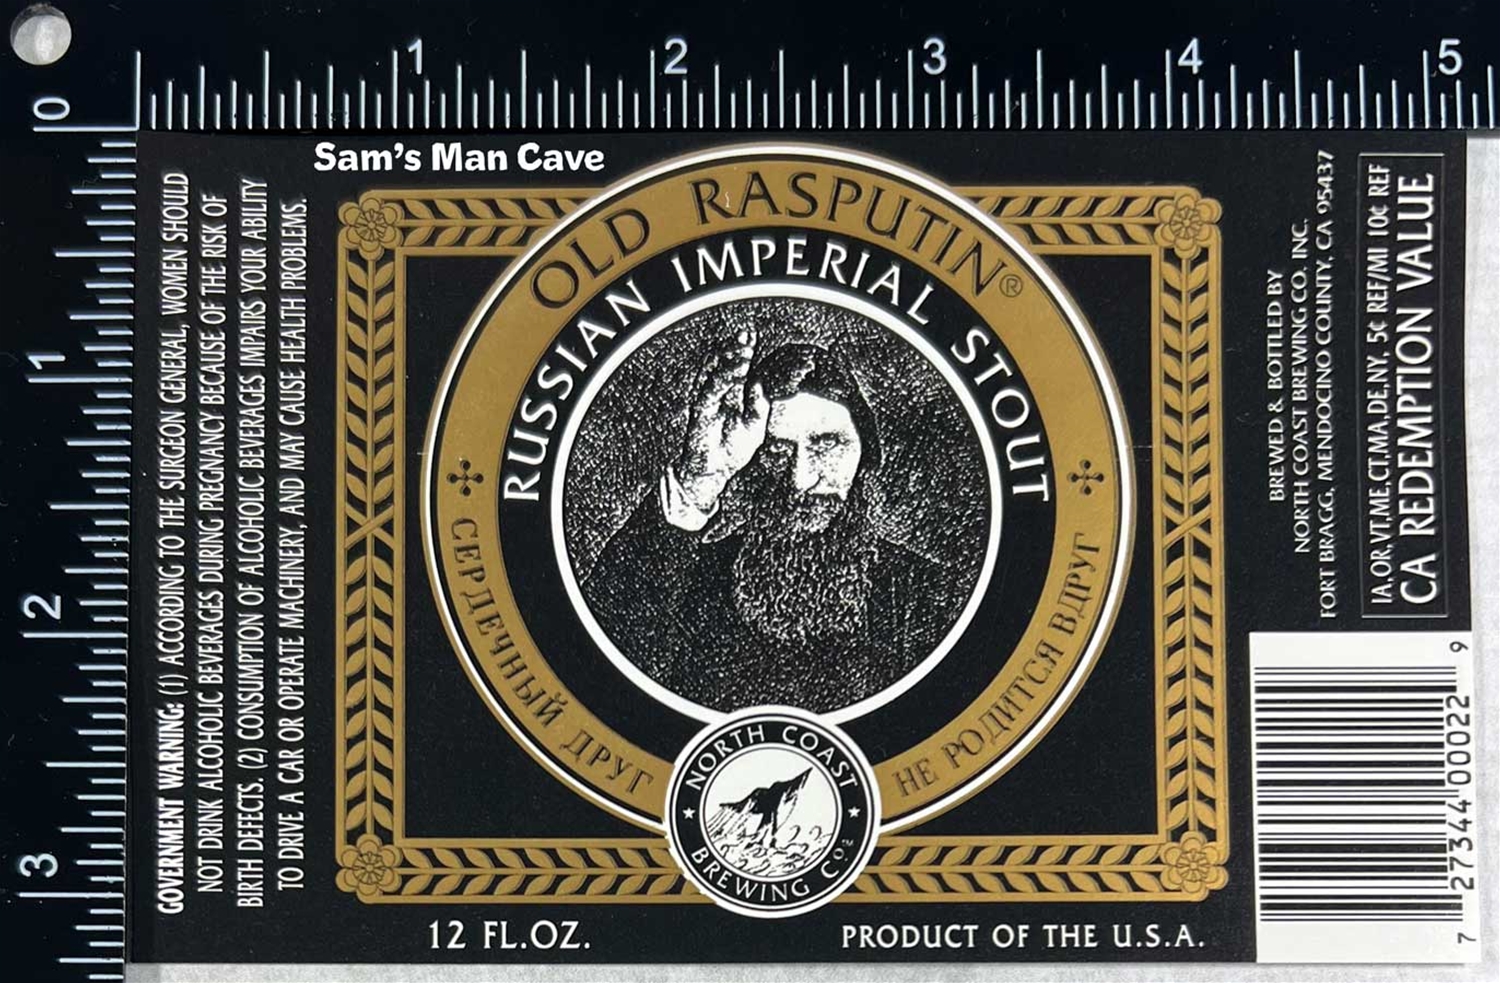 North Coast Old Rasputin Russian Imperial Stout Label